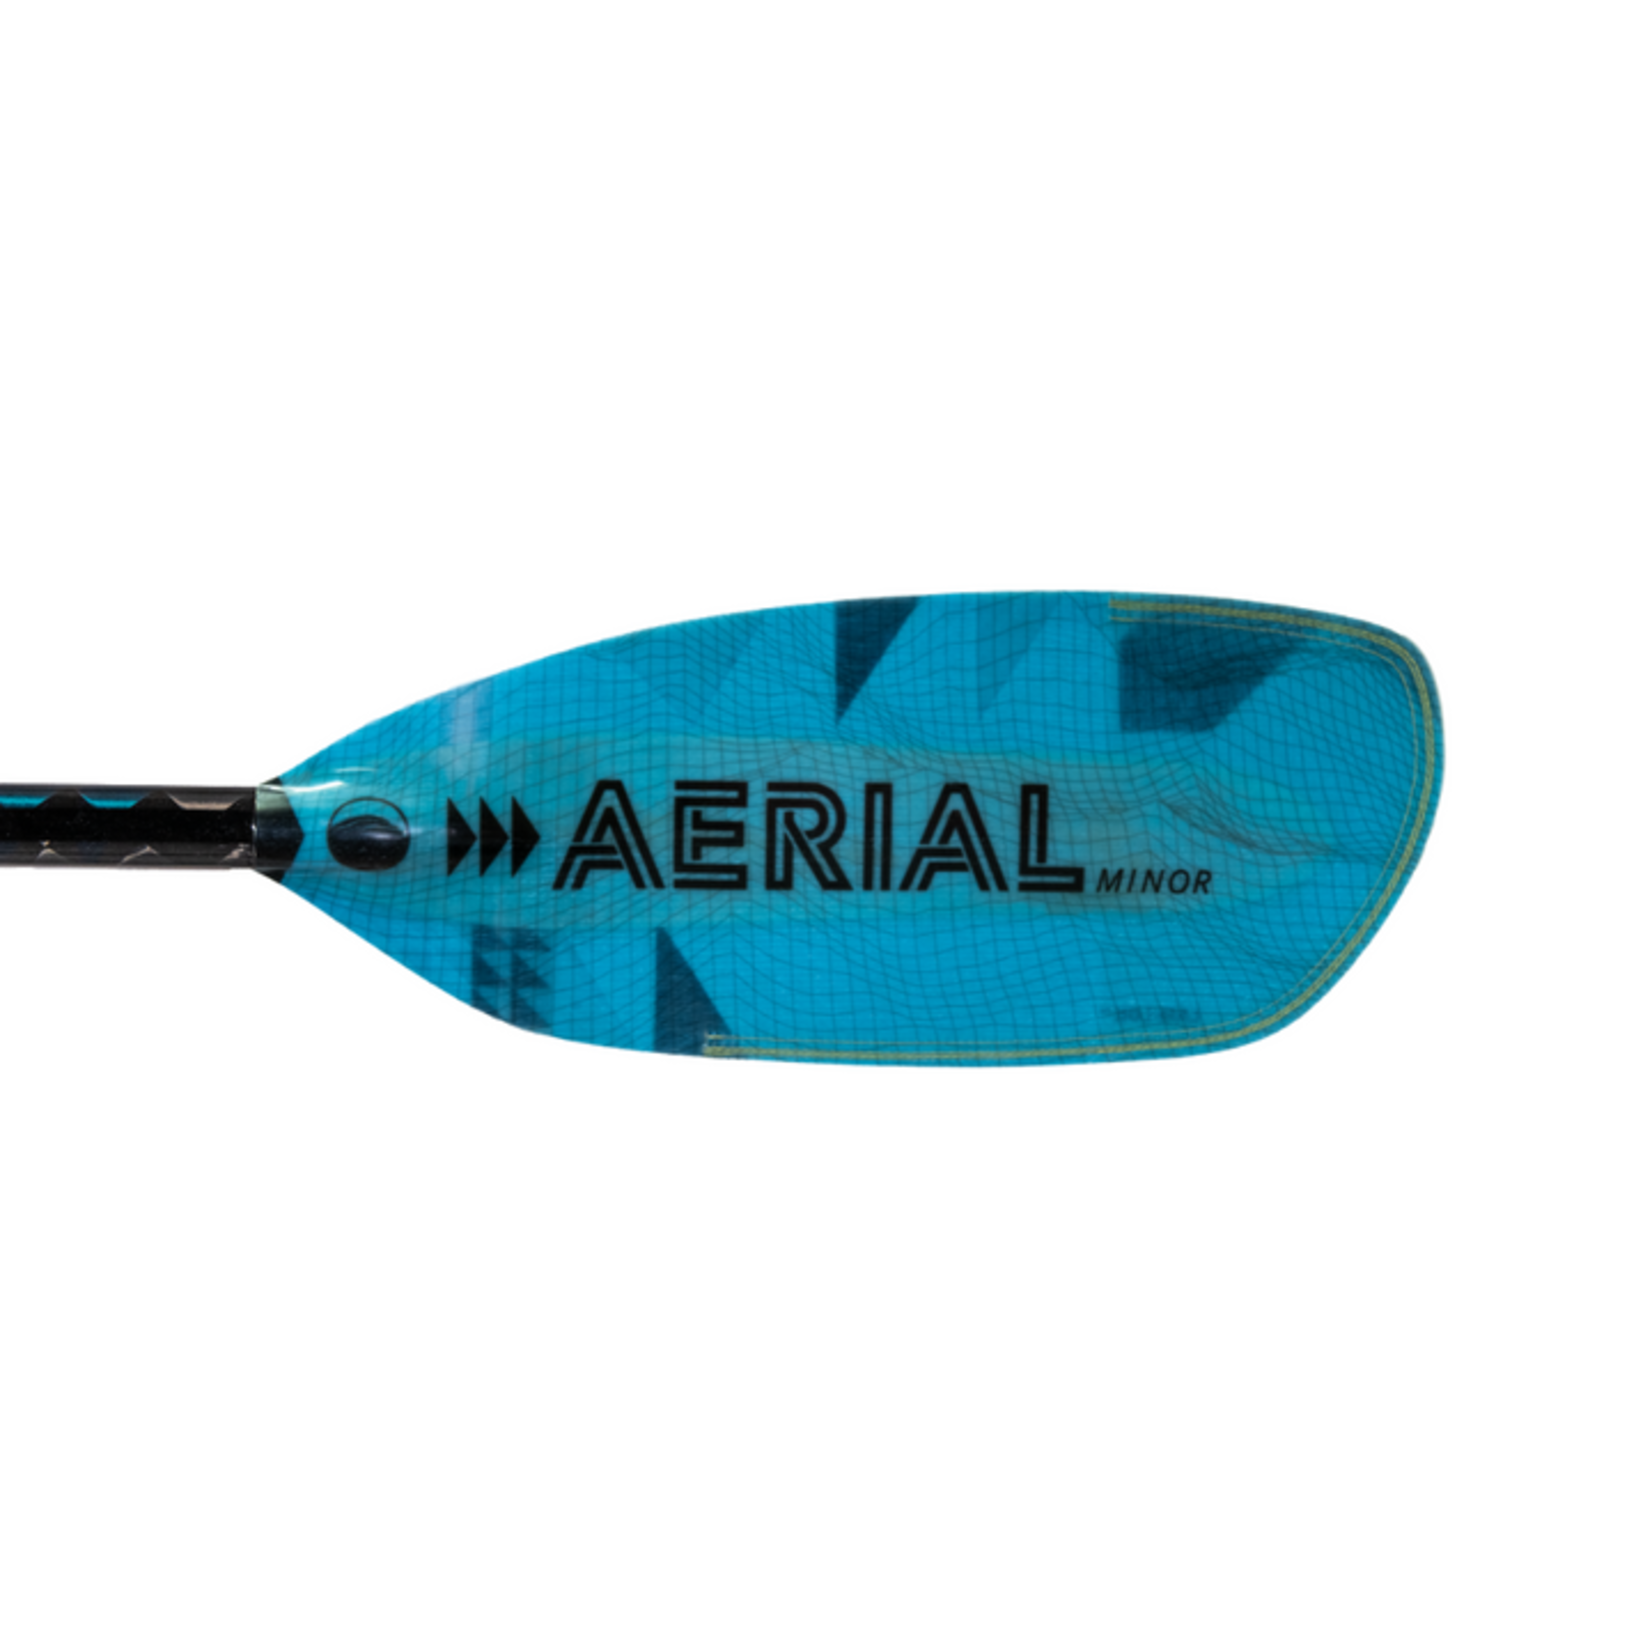 Aqua Bound Aqua Bound Aerial Minor Fiberglass 2-Piece Versa-Lok Crank Shaft Kayak Paddle